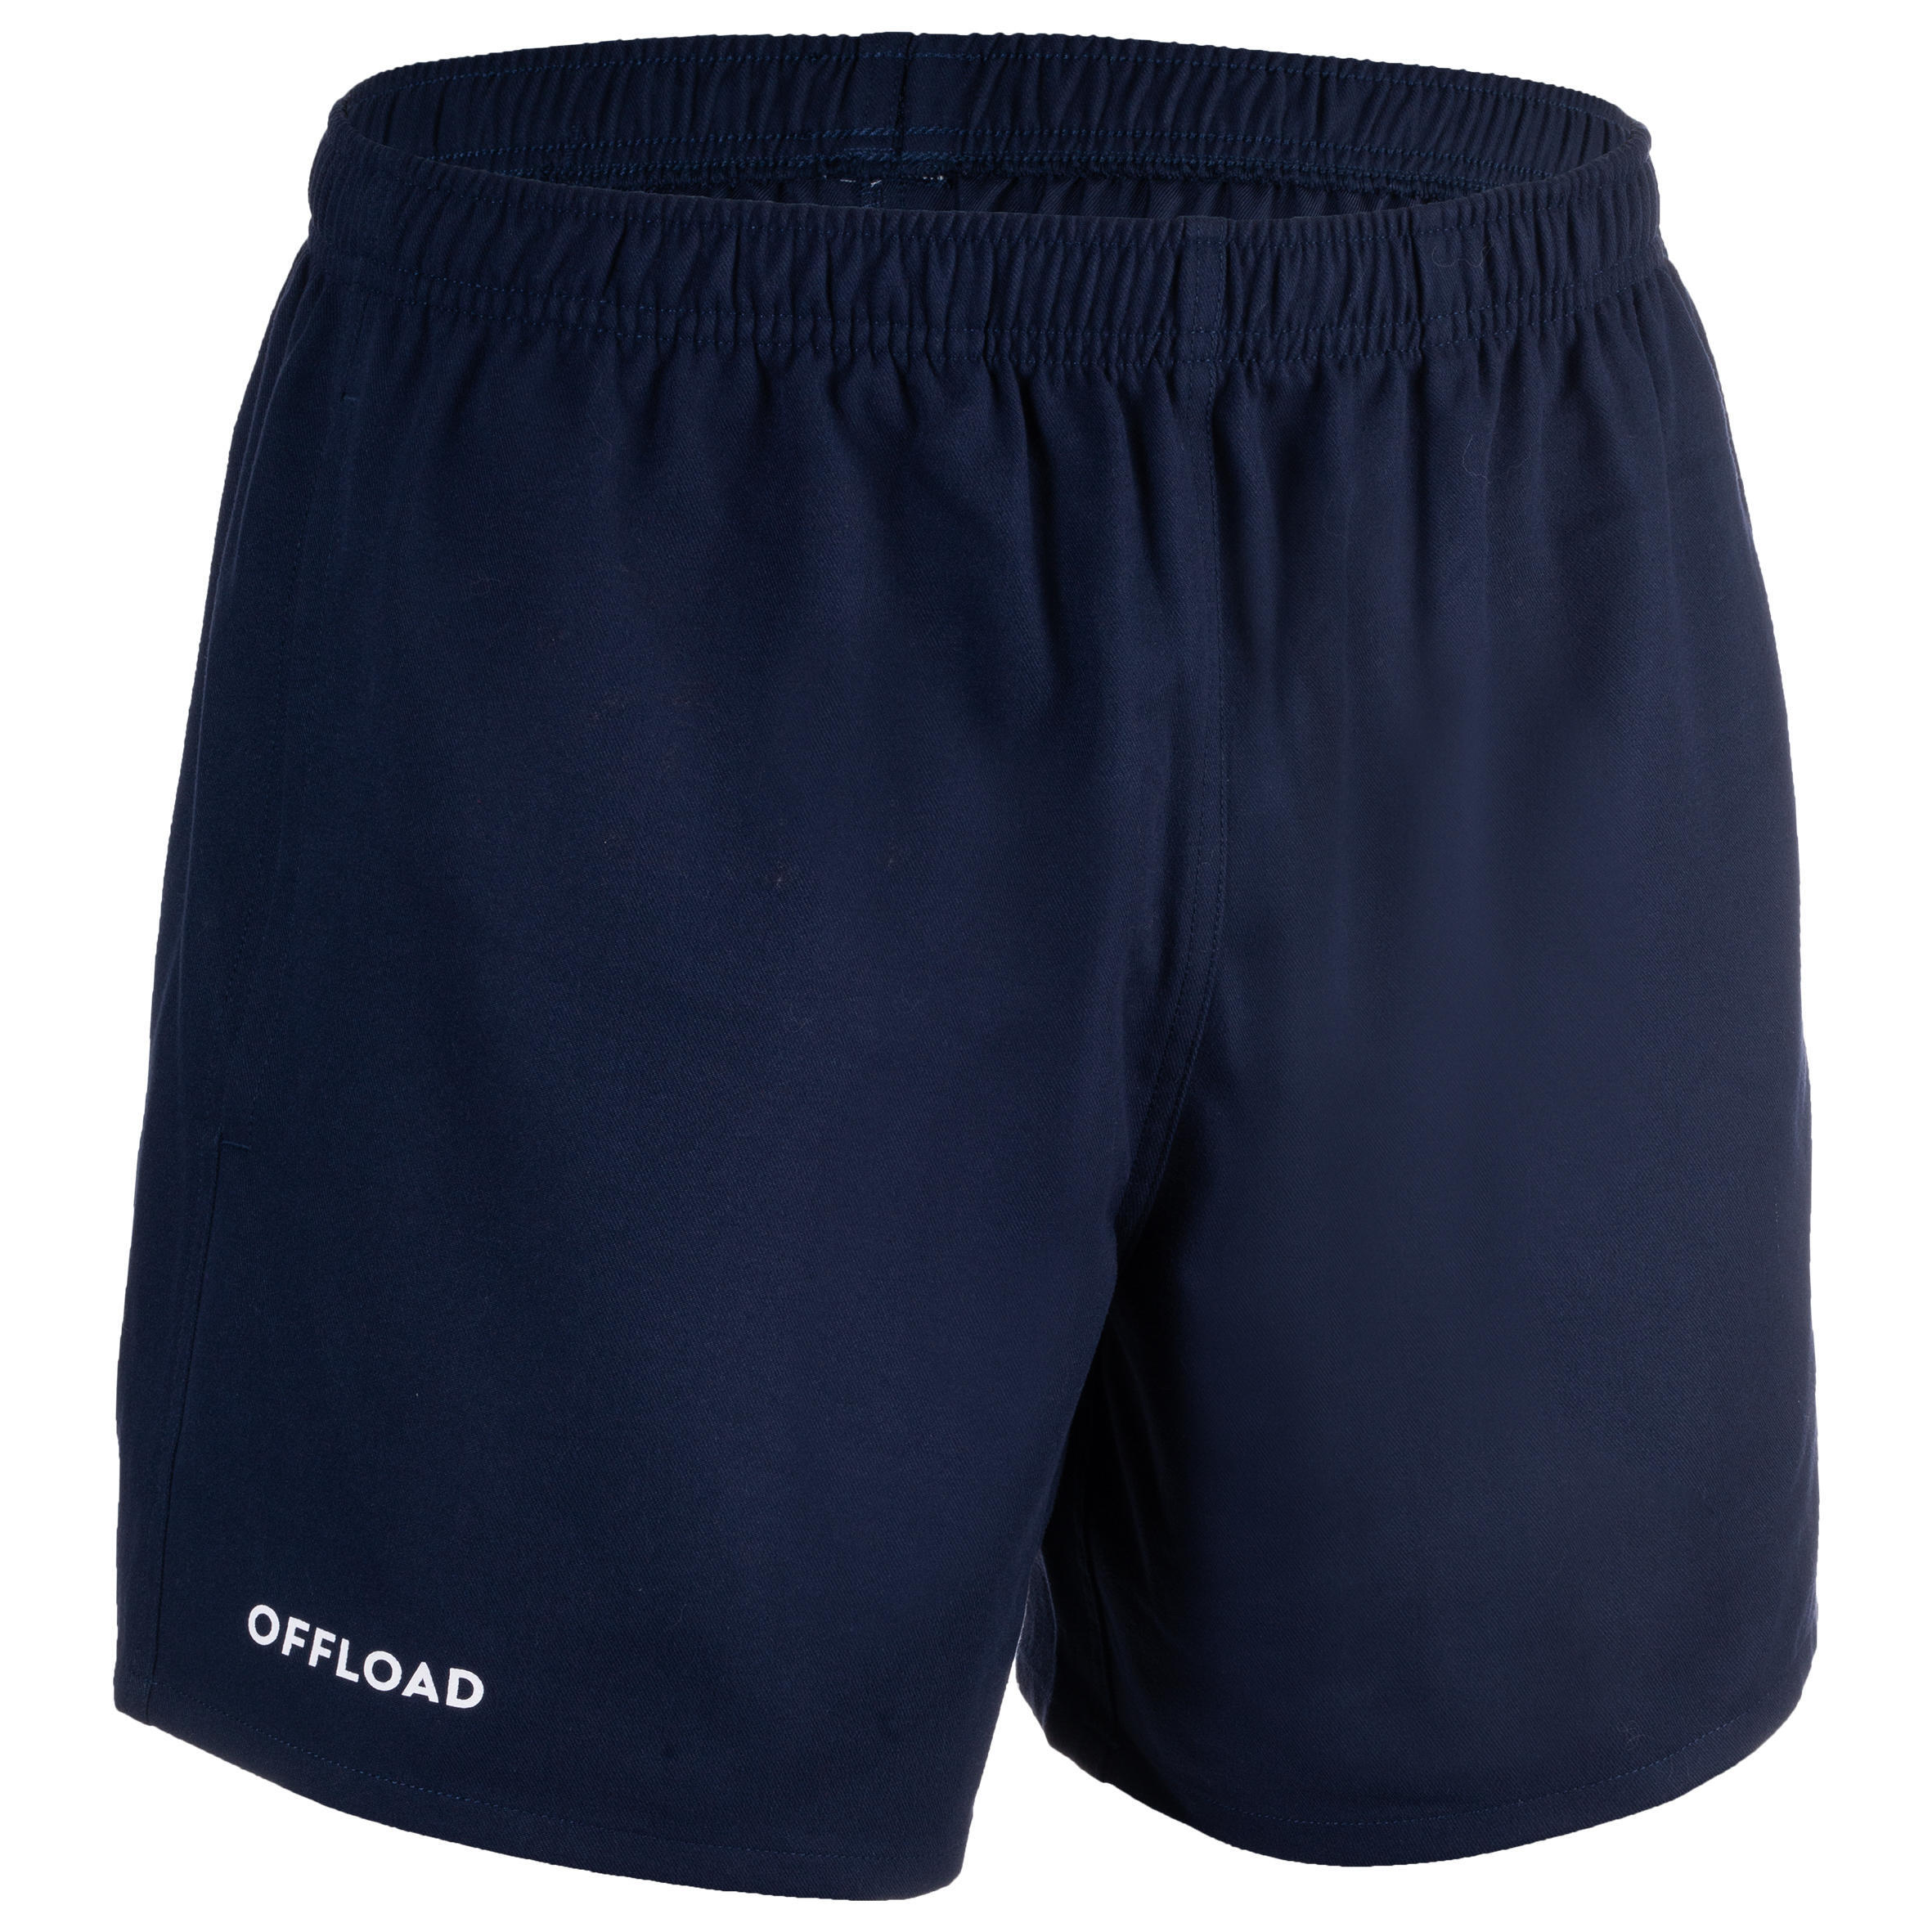 Adult Pocketless Rugby Shorts R100 - Navy Blue 1/5